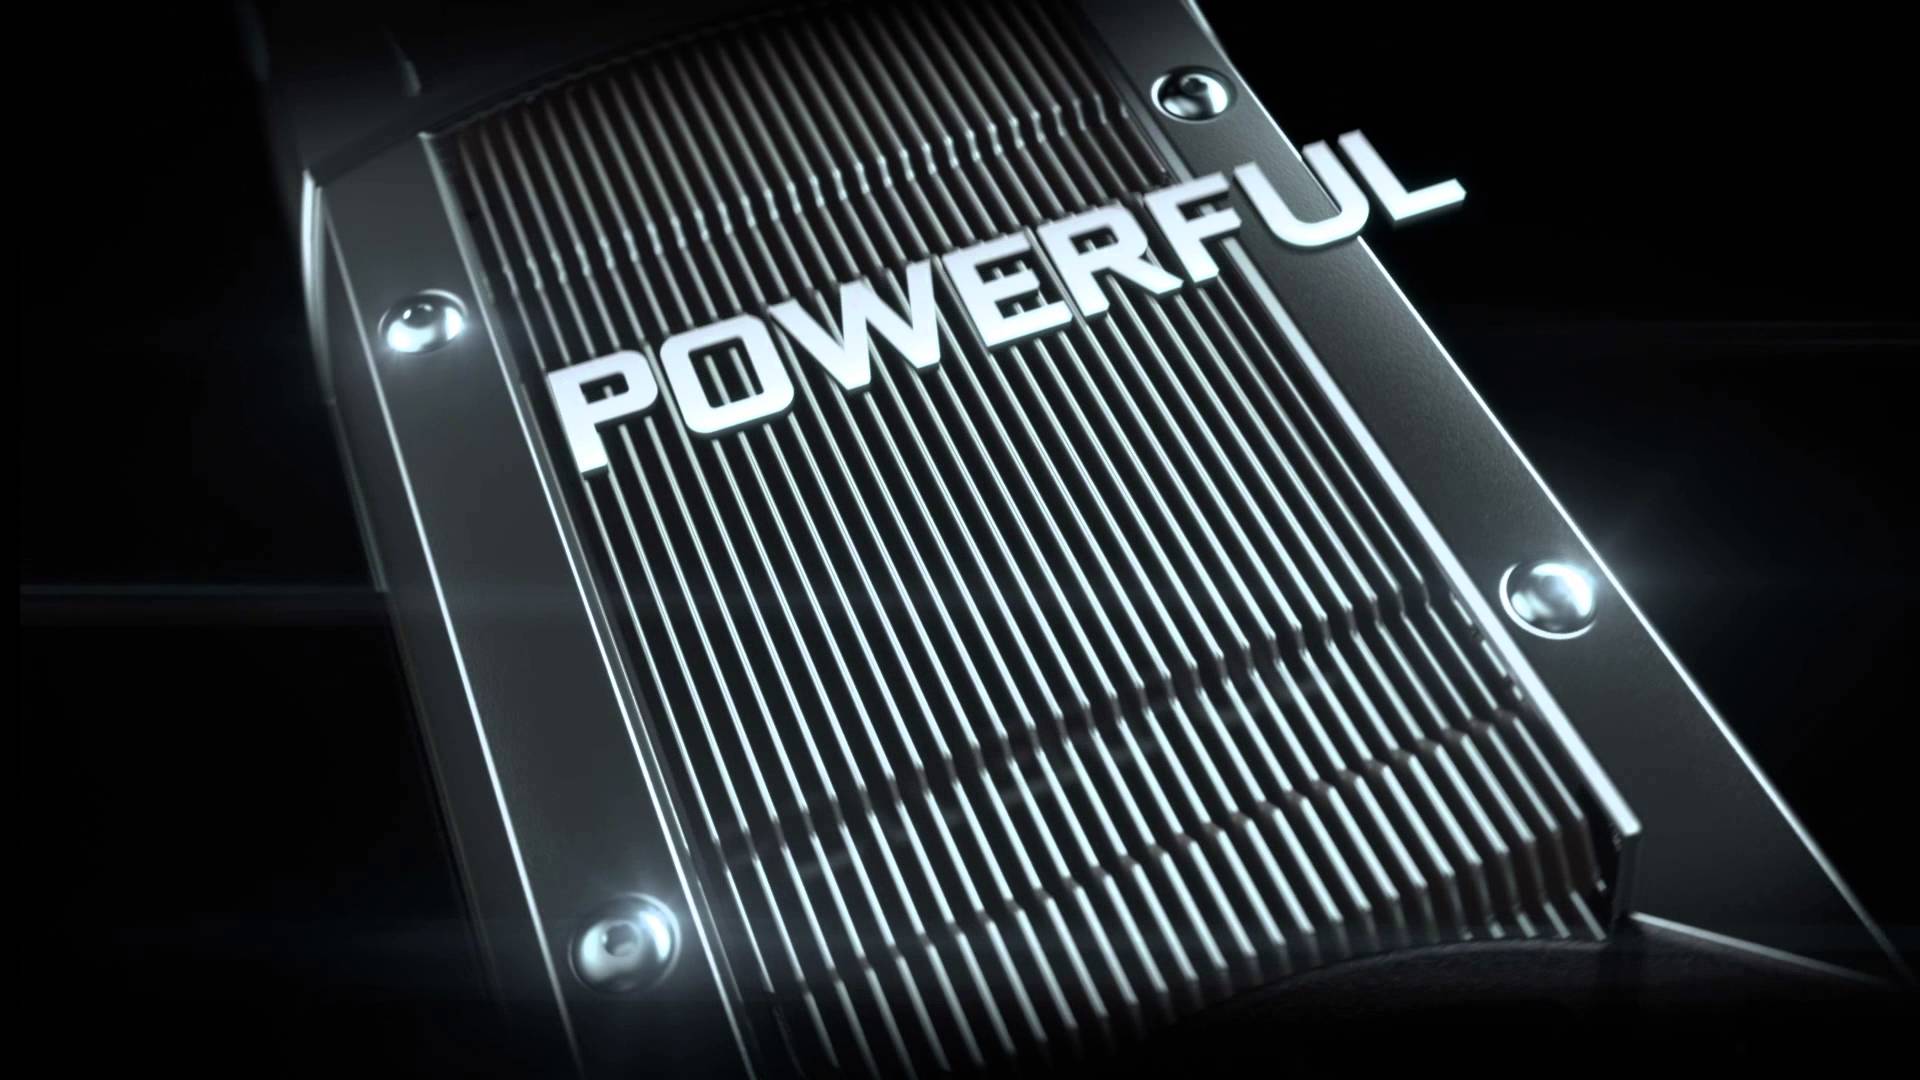 NVIDIA Unleashed GeForce GTX Titan Black, With Fully Enabled Kepler GPU